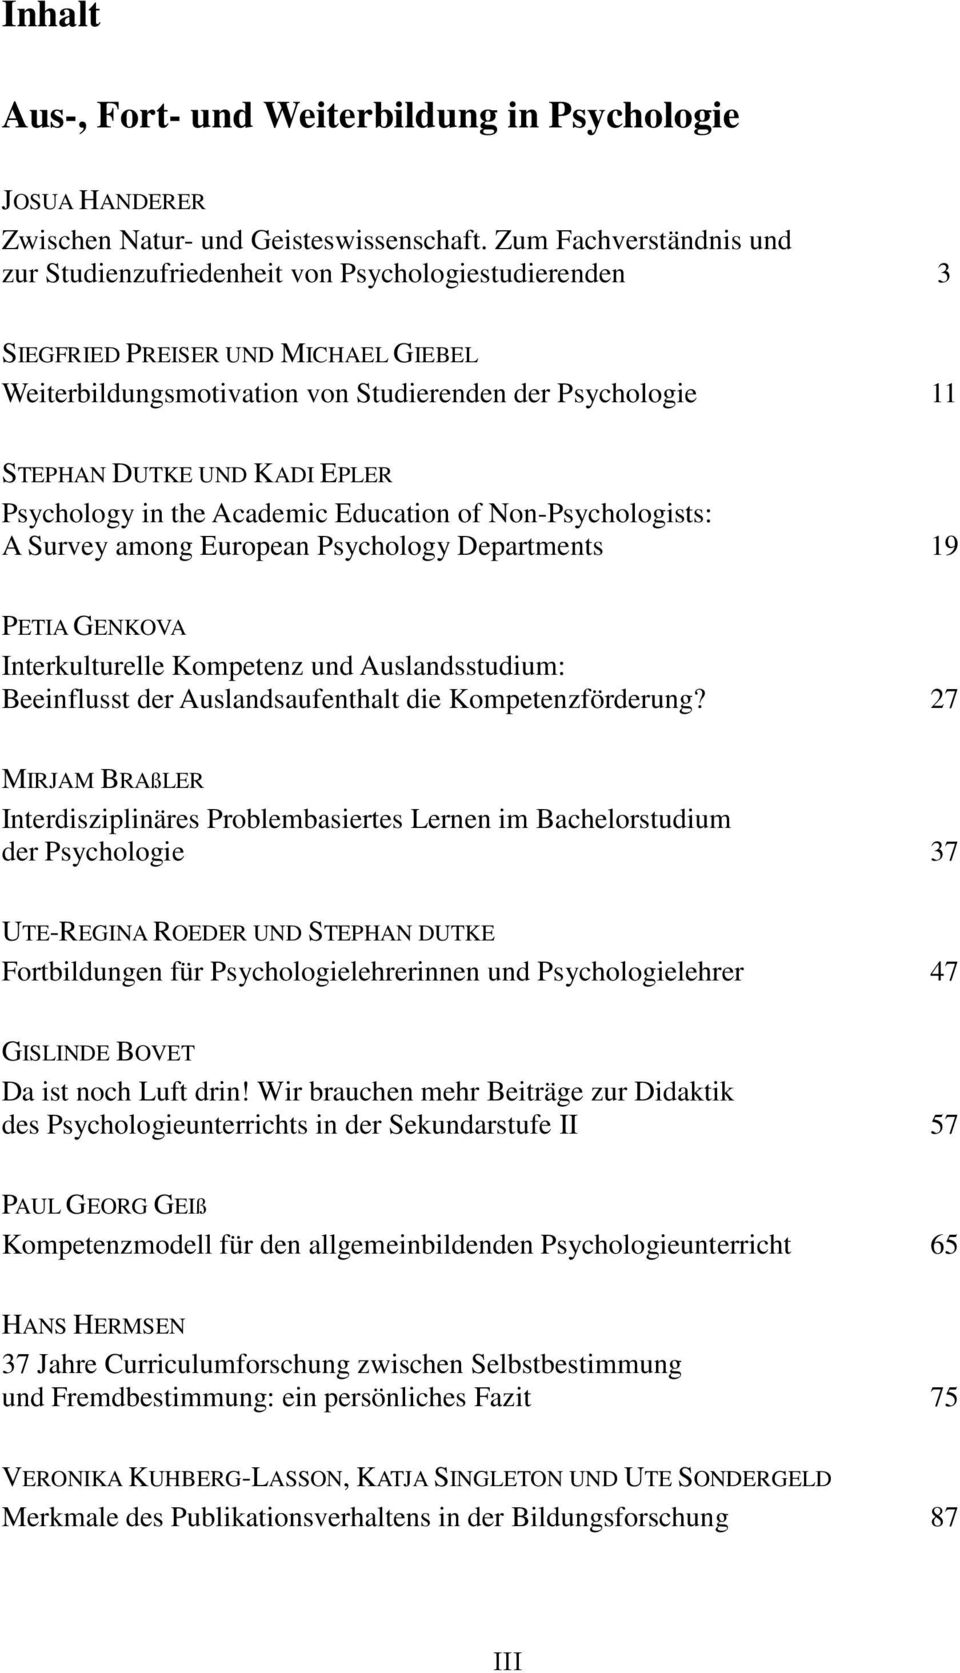 EPLER Psychology in the Academic Education of Non-Psychologists: A Survey among European Psychology Departments 19 PETIA GENKOVA Interkulturelle Kompetenz und Auslandsstudium: Beeinflusst der